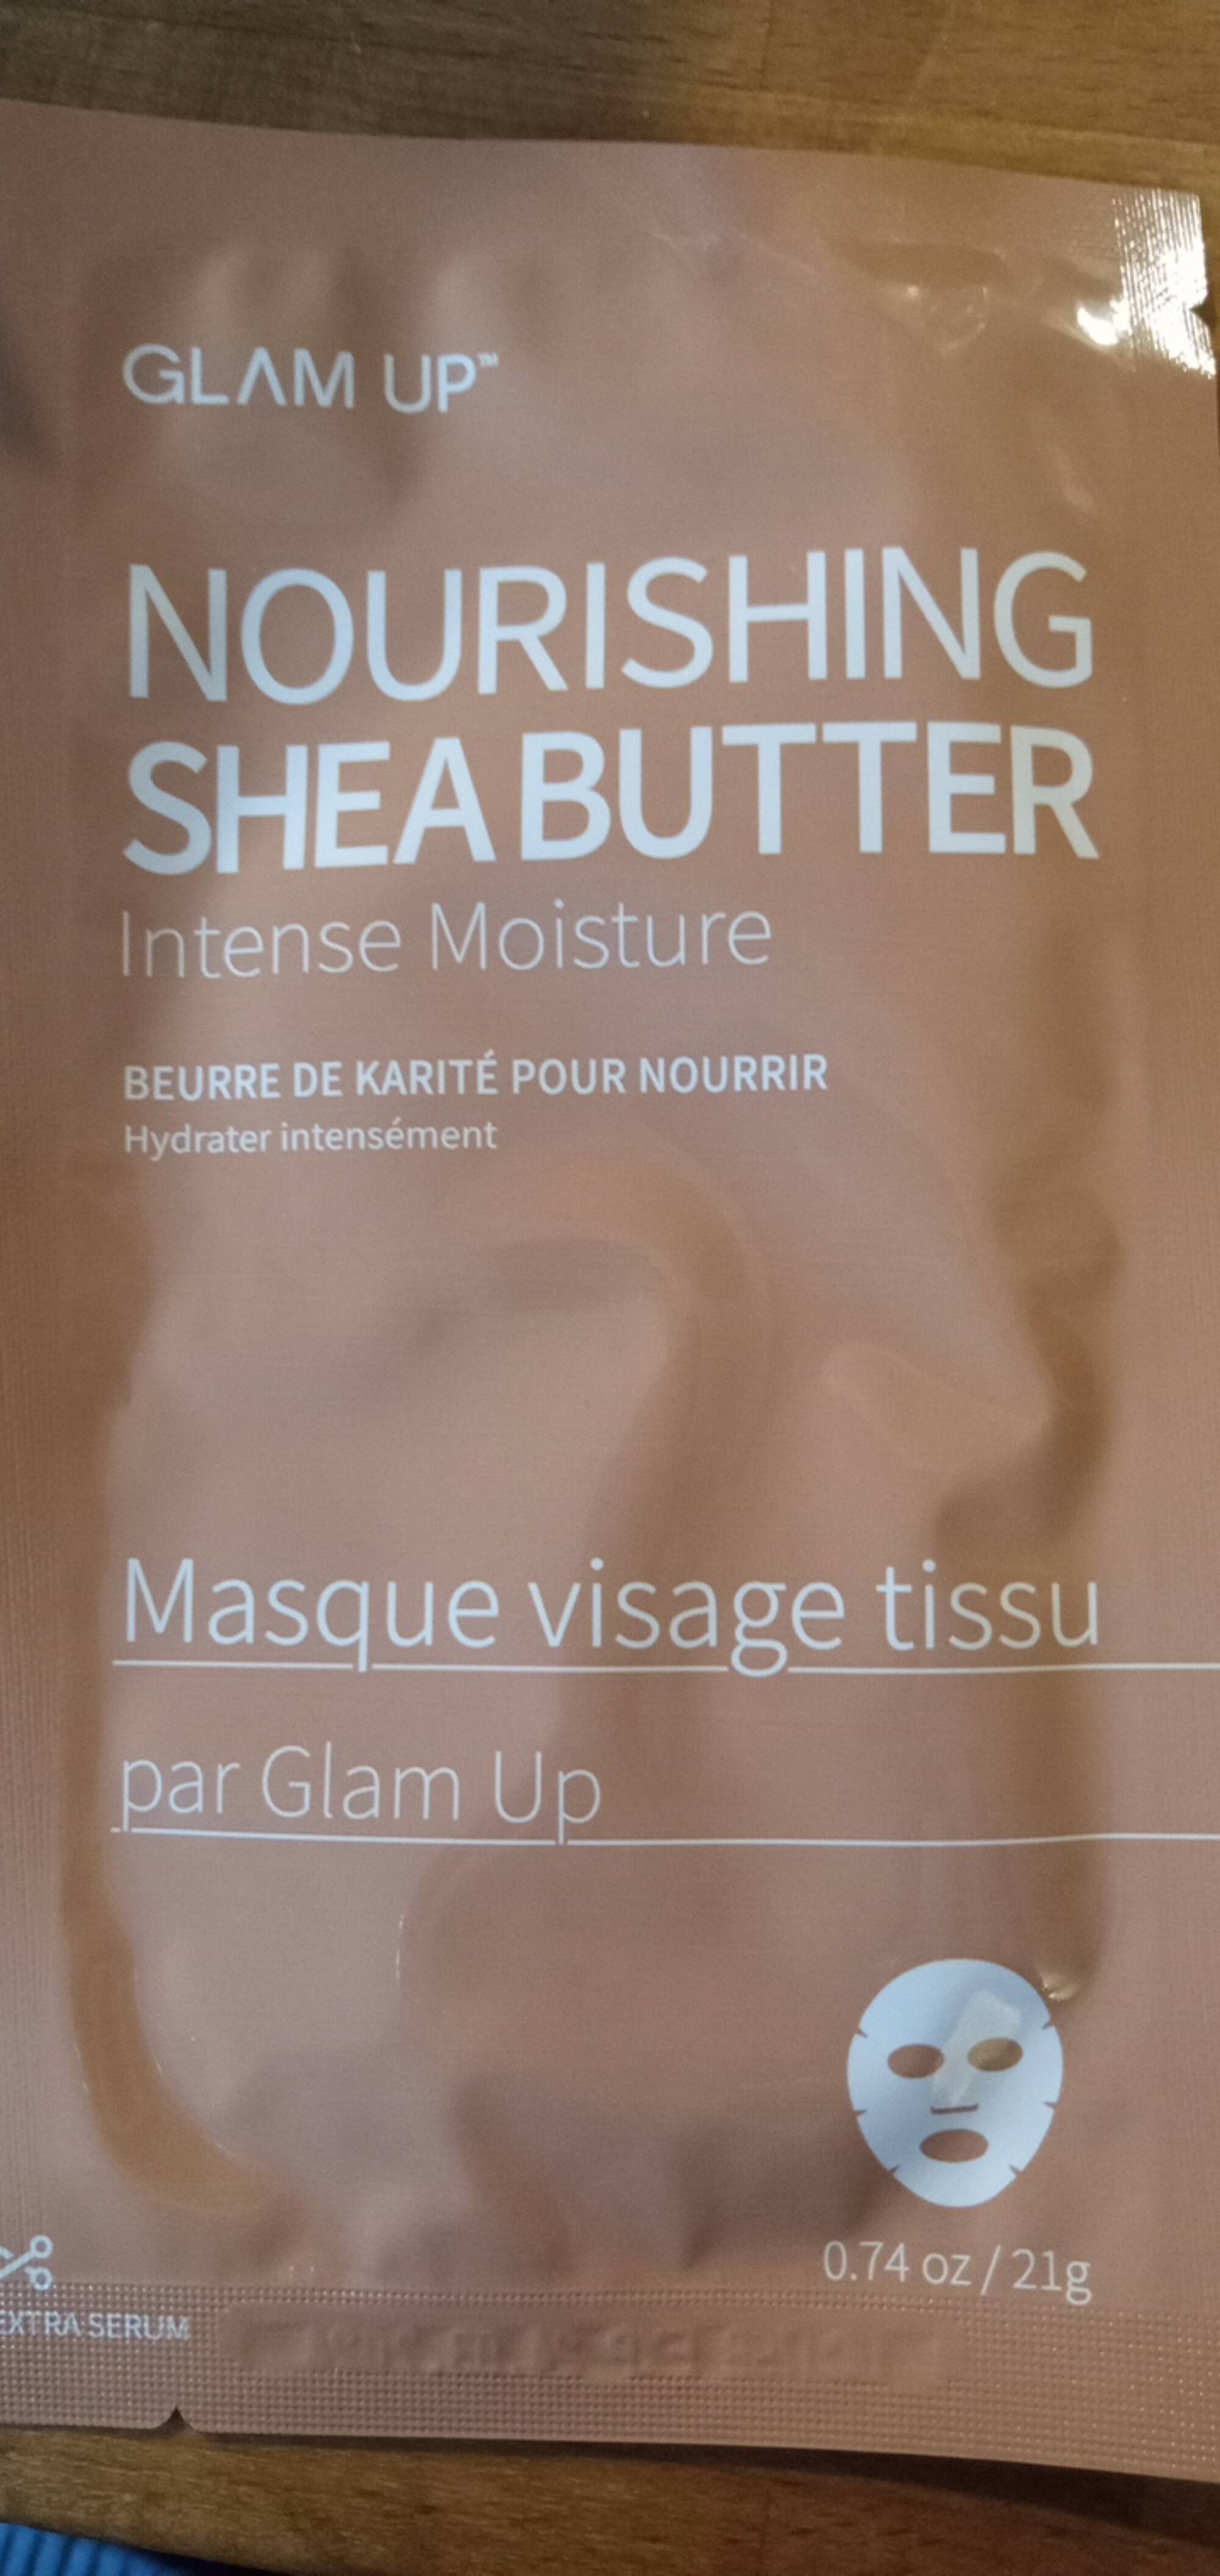 GLAM'UP - Nourishing shea butter - Masque visage tissu